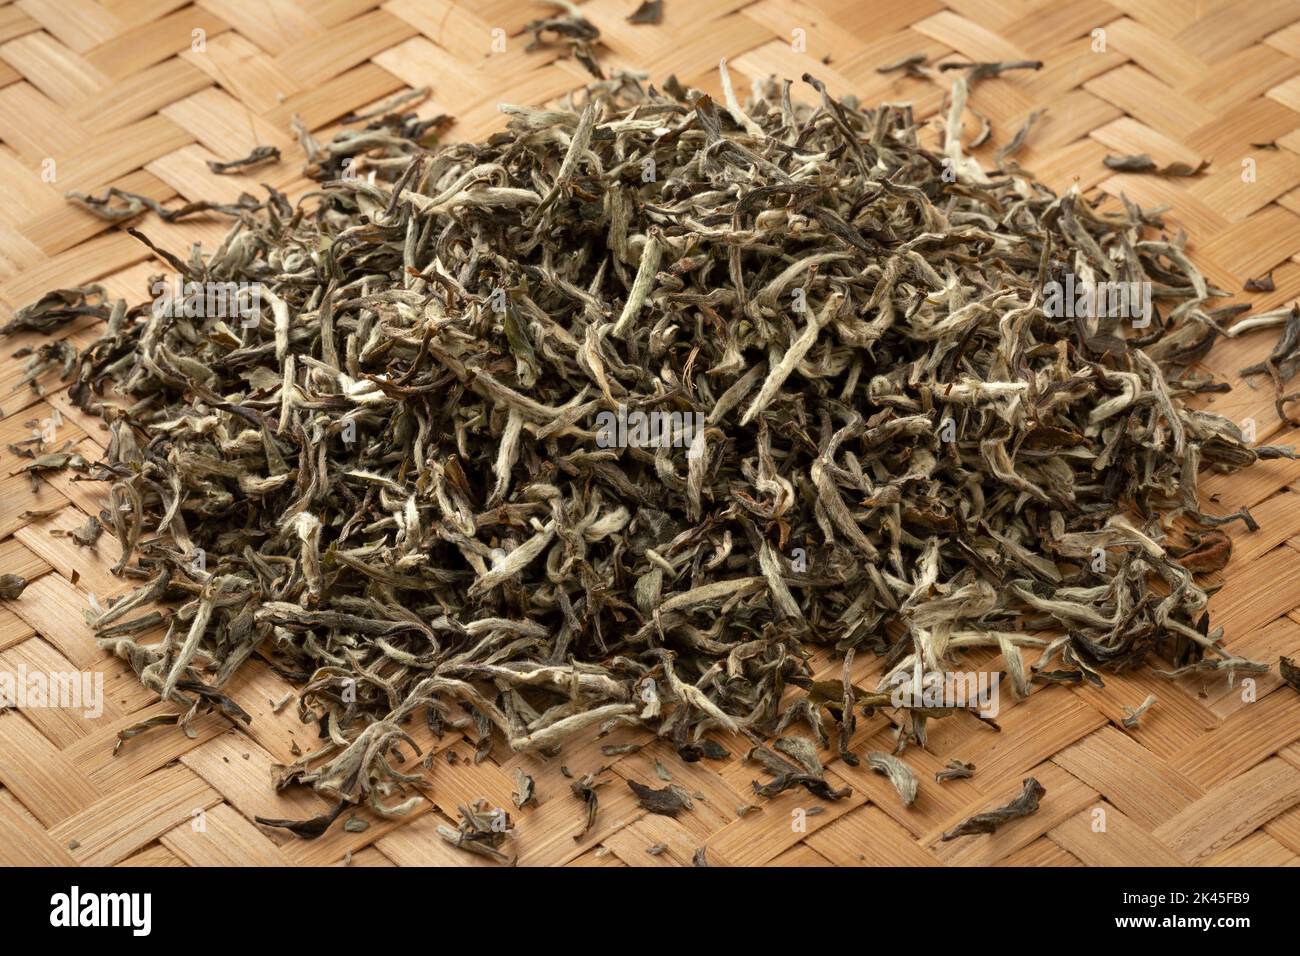 Montón de hojas secas de té de naranja blanca nepalesa de cerca en una estera de mimbre Foto de stock